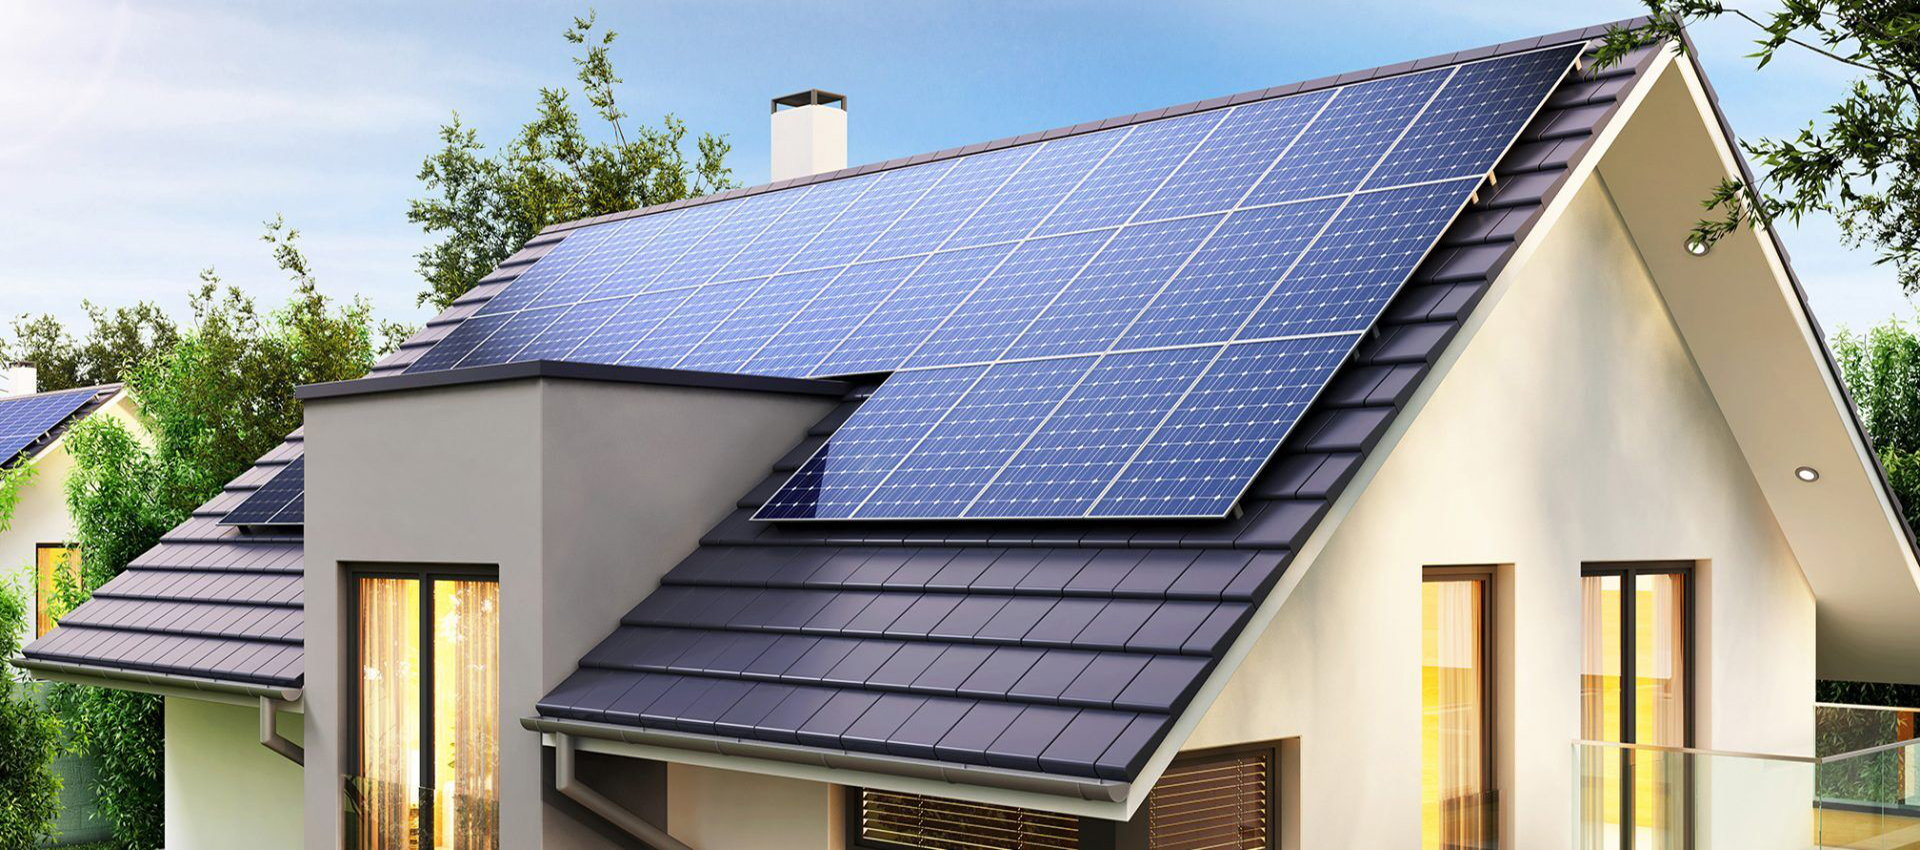 PV-solar-panels-header-1920x850